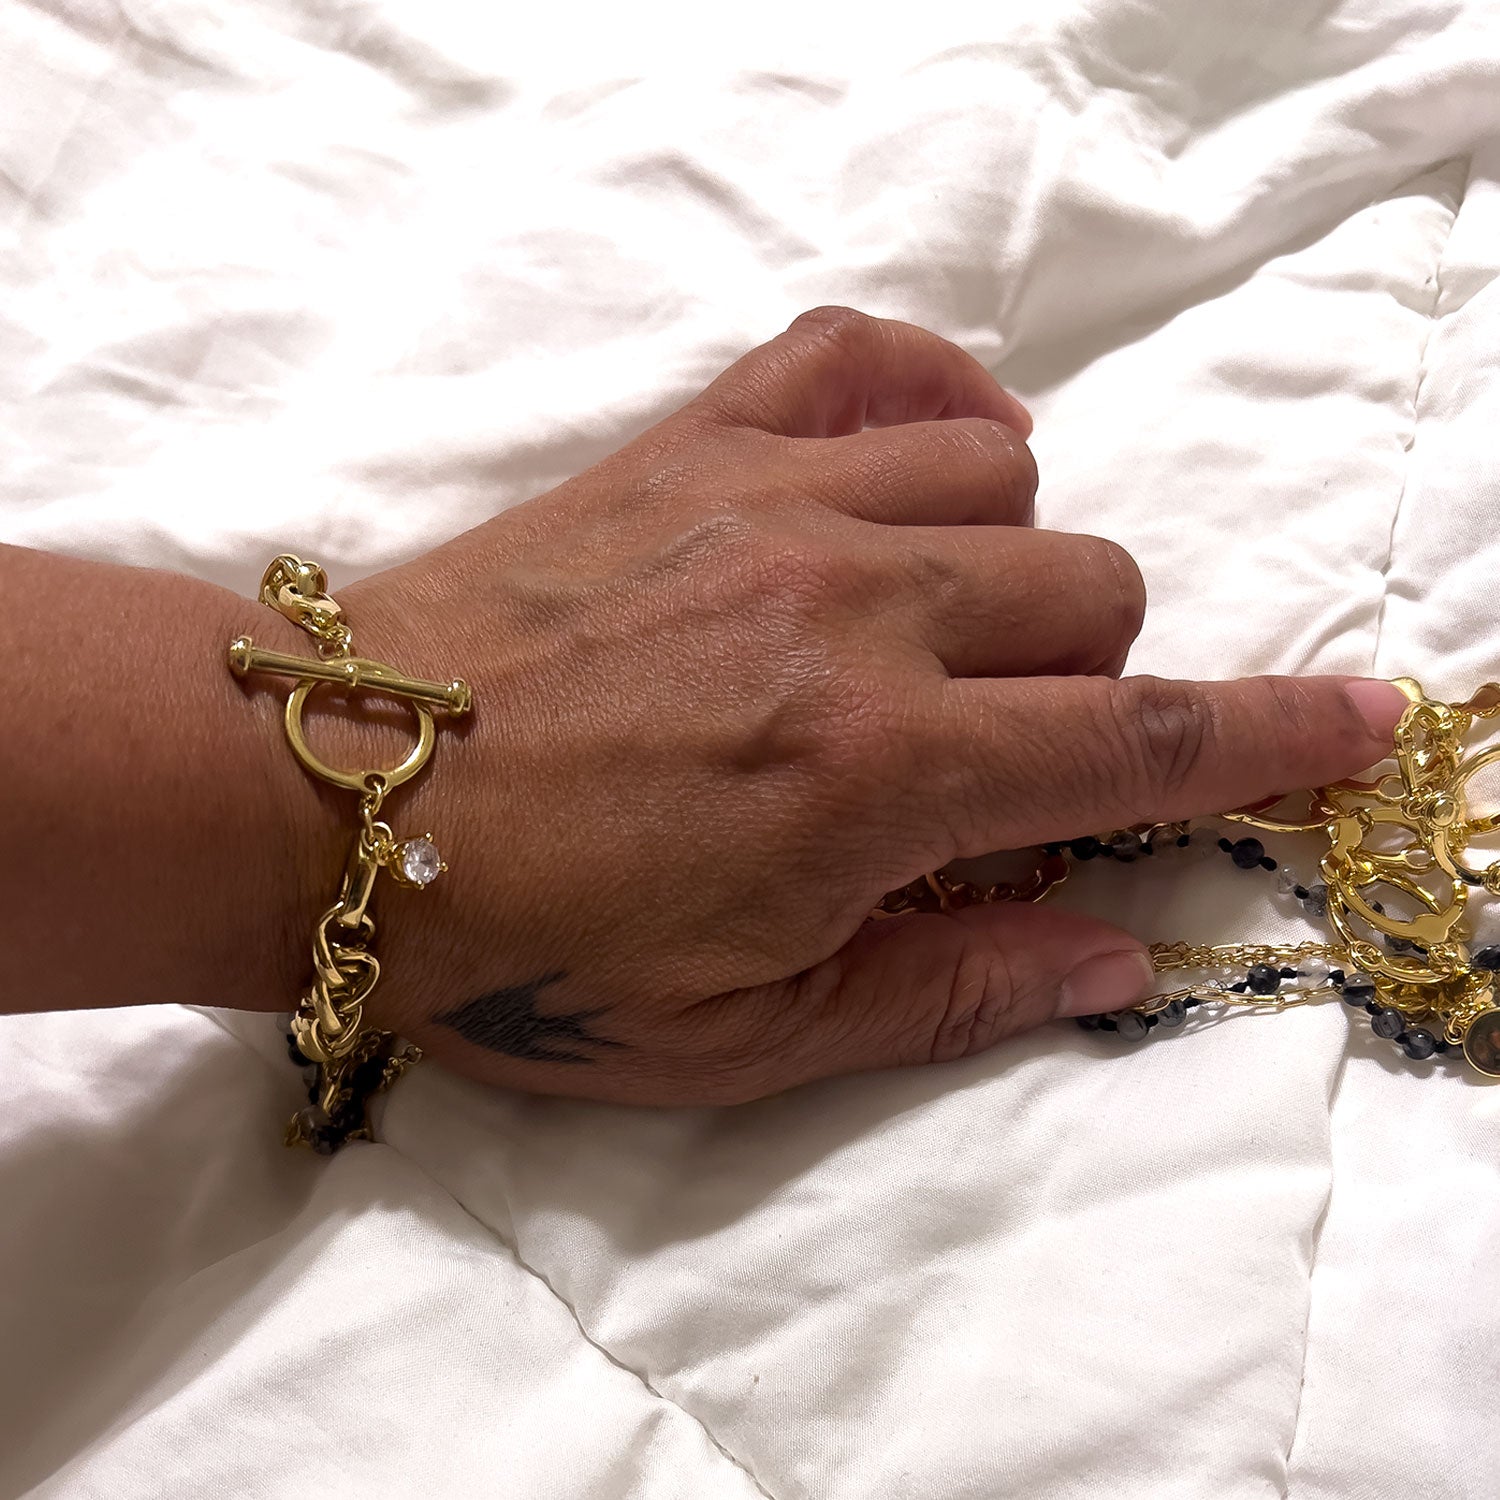 Andreas Wheat Chain Toggle Closure Bracelet